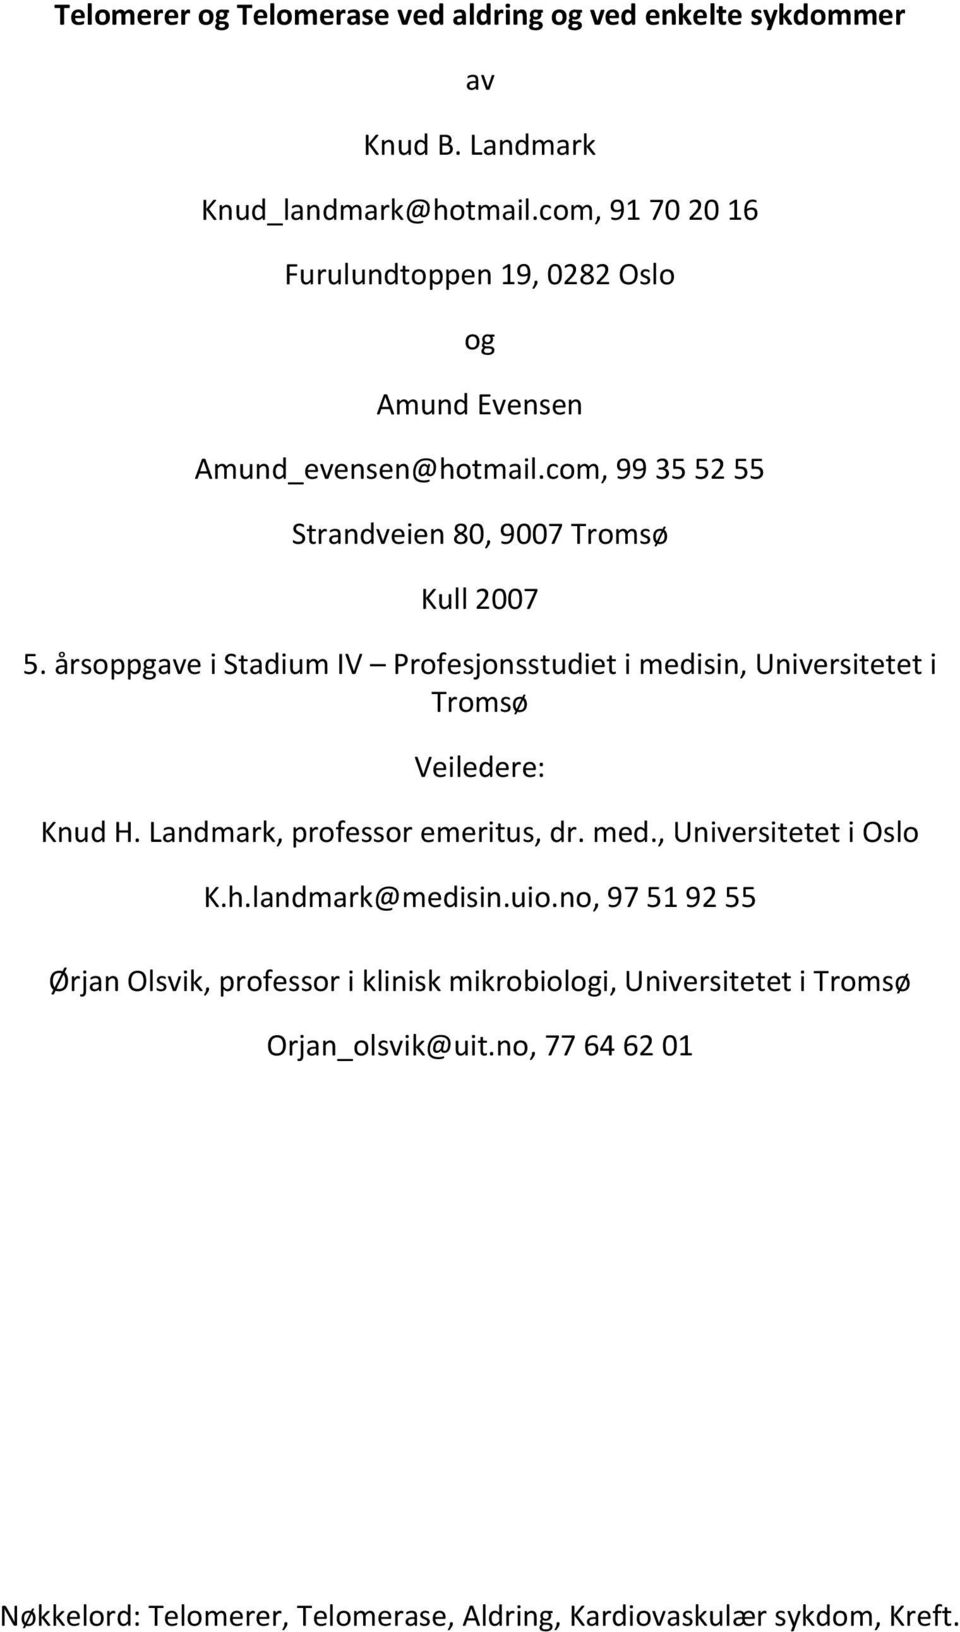 årsoppgaveiStadiumIV Profesjonsstudietimedisin,Universiteteti Tromsø Veiledere: KnudH.Landmark,professoremeritus,dr.med.,UniversitetetiOslo K.